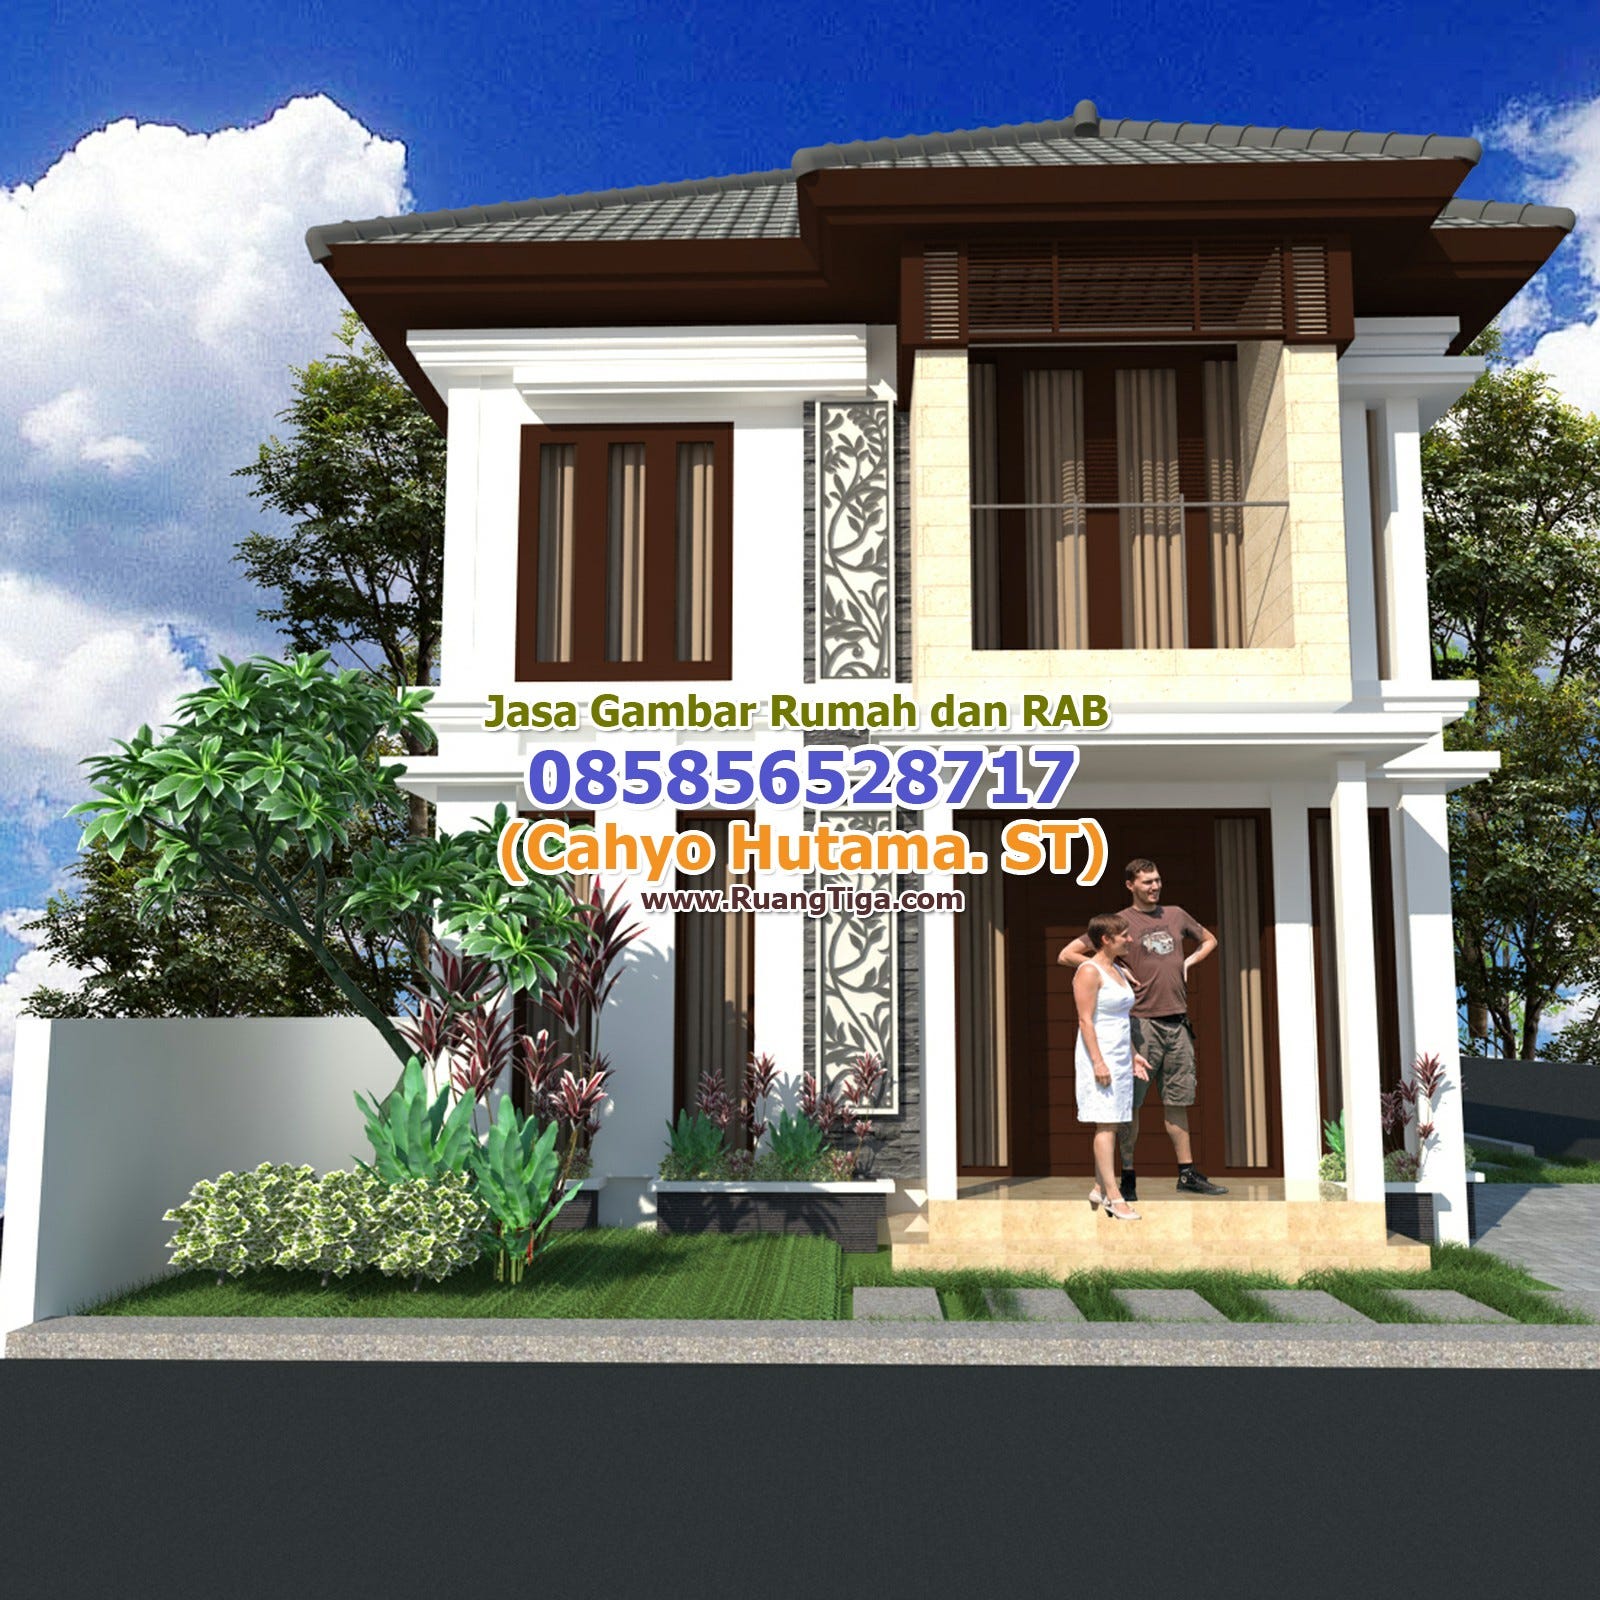 085856528717 Jasa Desain Rumah Minimalis Modern Jasa Gambar